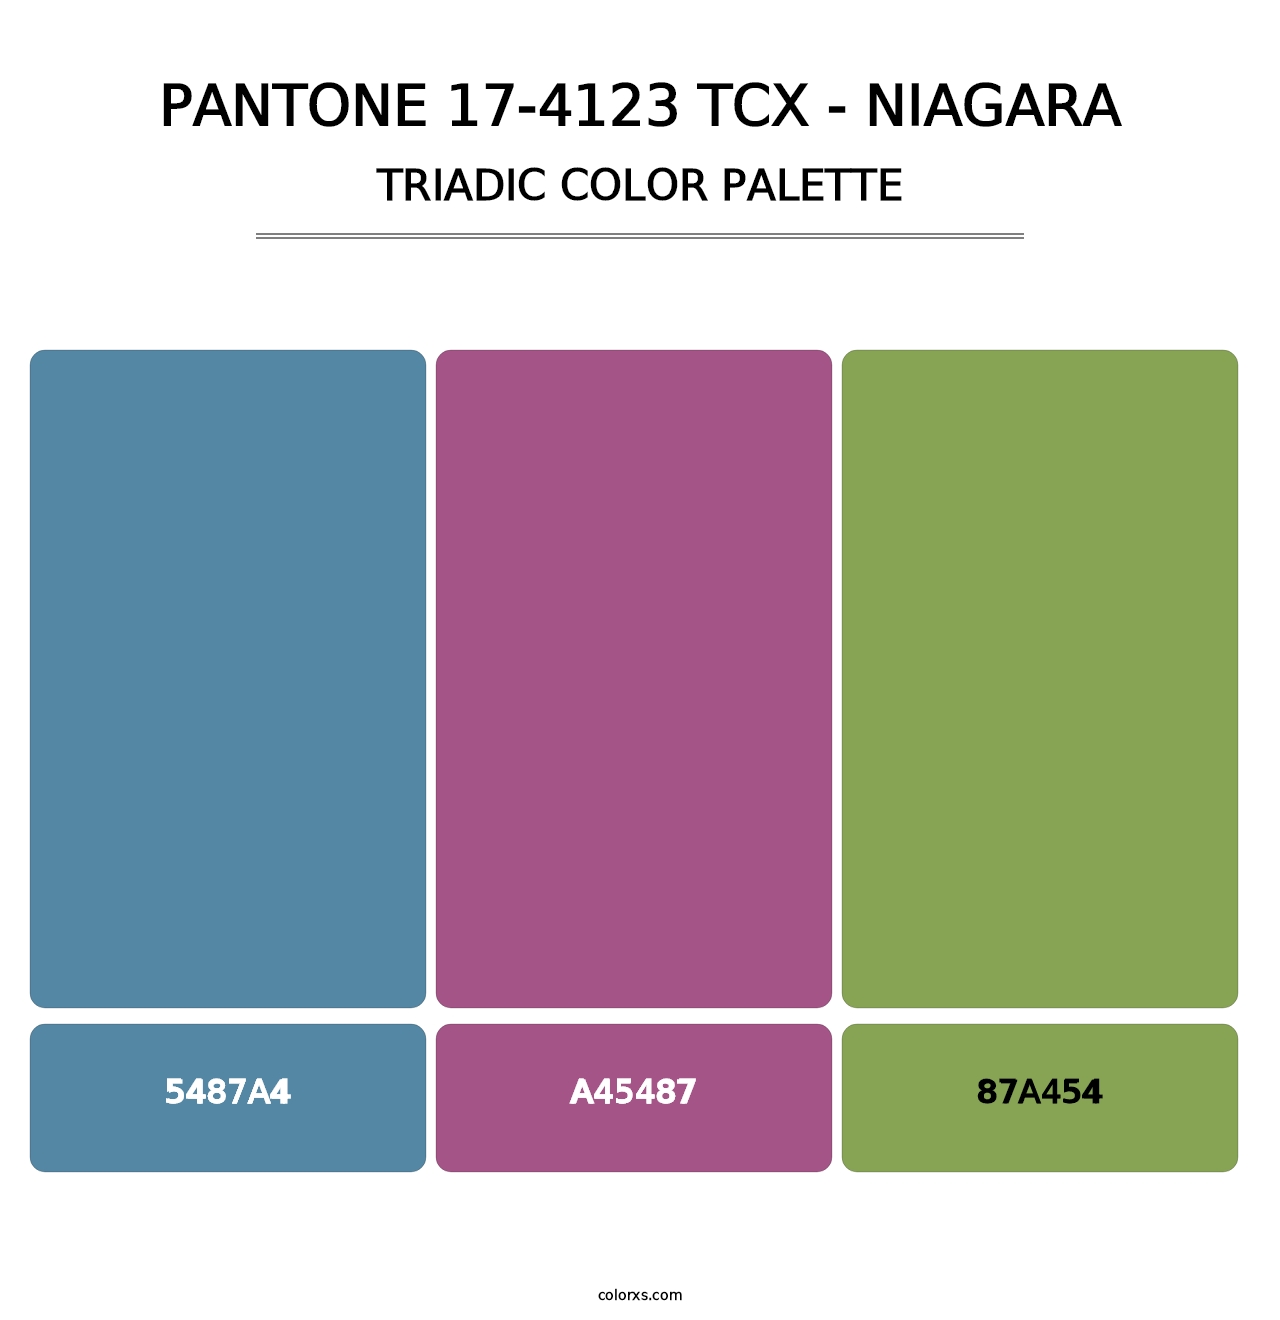 PANTONE 17-4123 TCX - Niagara - Triadic Color Palette